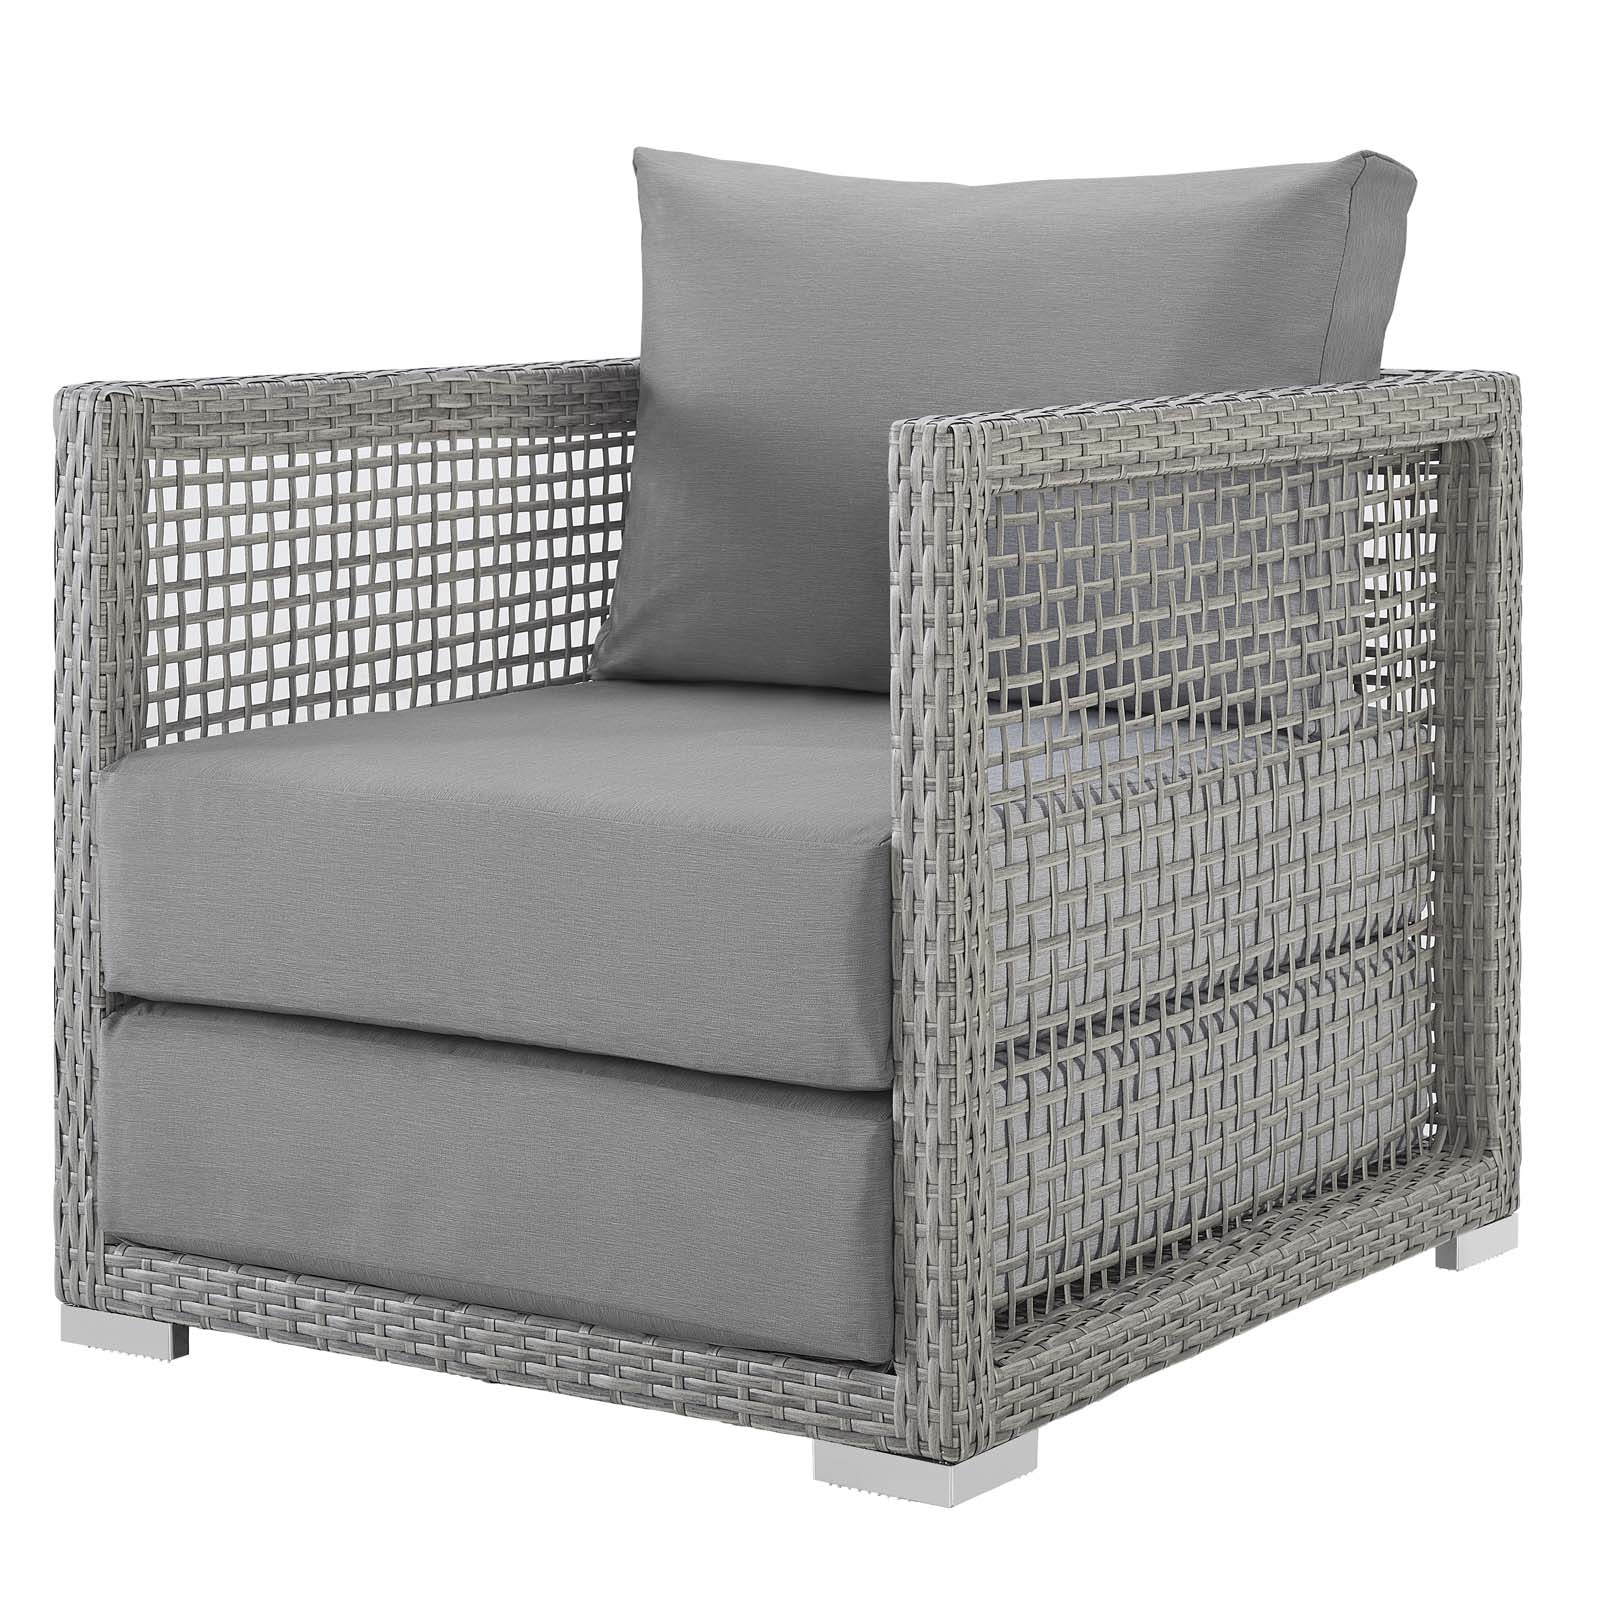 Modern Contemporary Urban Design Outdoor Patio Balcony Garden Furniture Lounge Chair Armchair, Rattan Wicker, Grey Gray - image 1 of 6